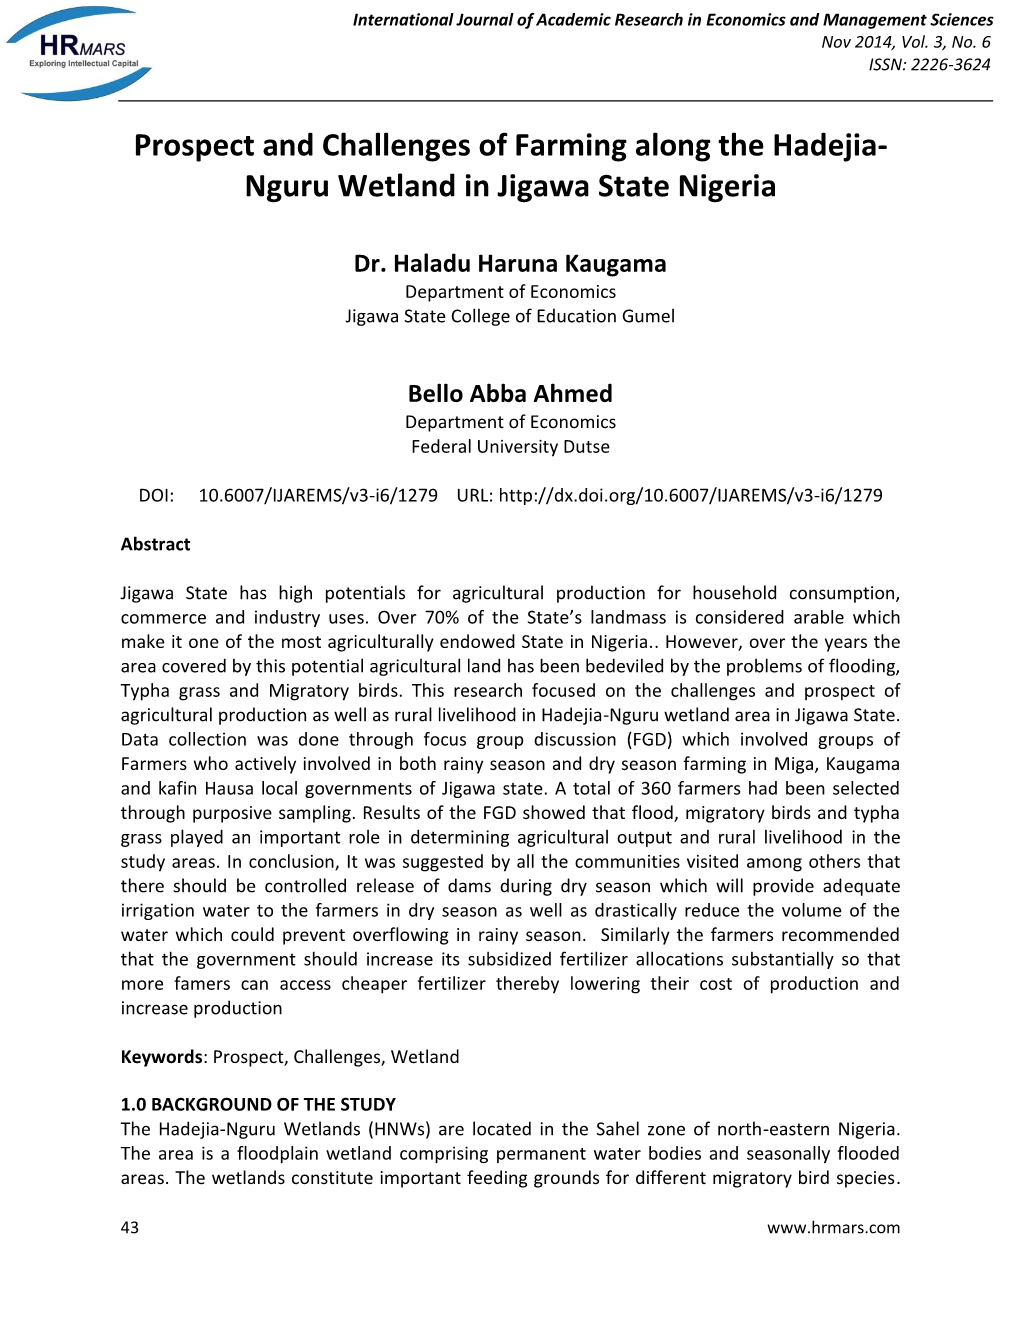 Prospect and Challenges of Farming Along the Hadejia- Nguru Wetland in Jigawa State Nigeria